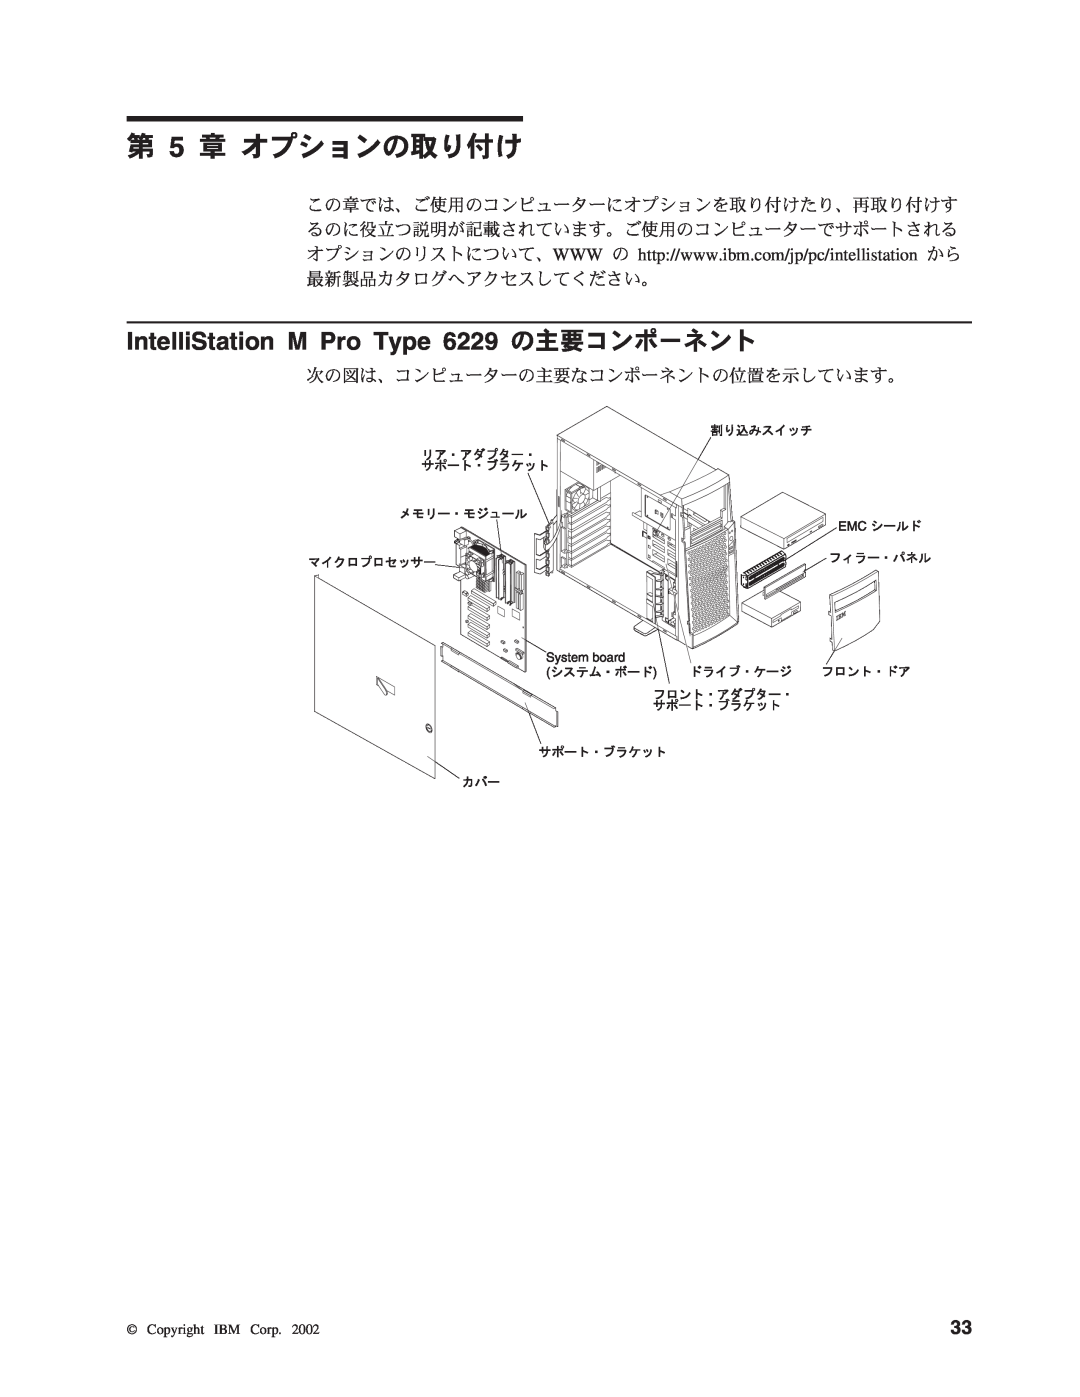 IBM 6229 manual IntelliStation M Pro Type, N^O3sTe<?<NgWJ3s<MsHNLVr7F$^9# 